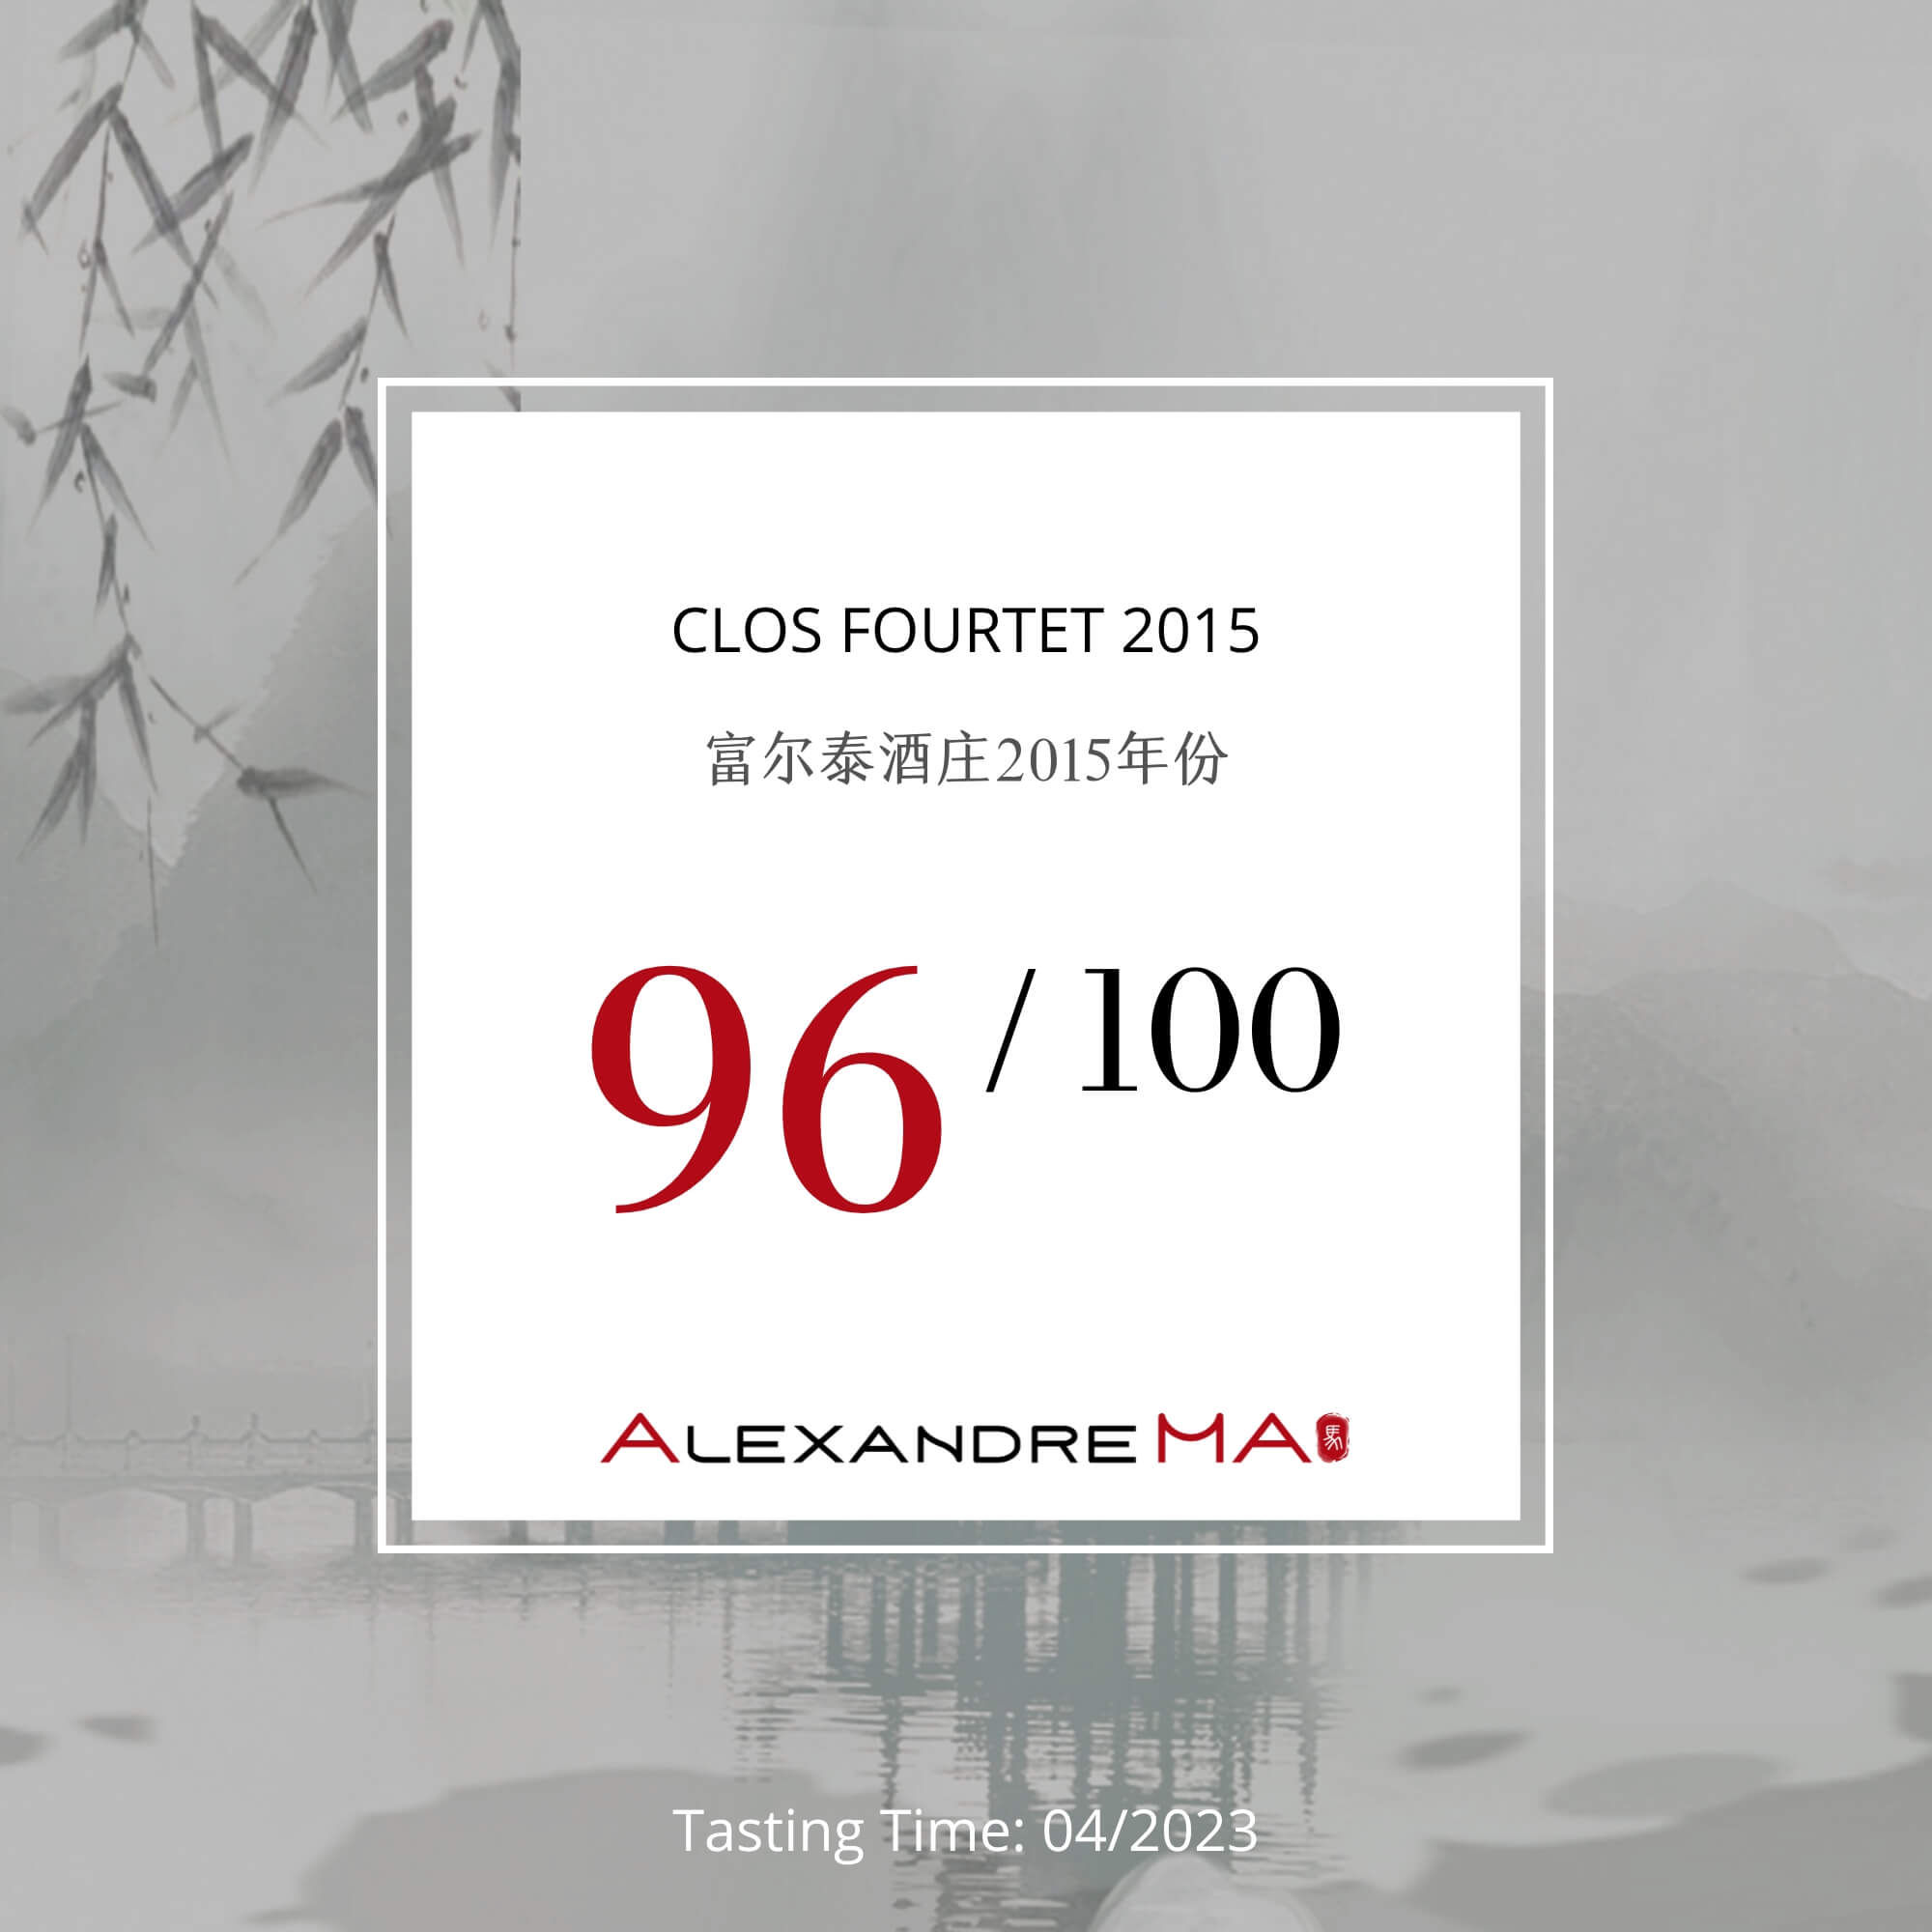 Clos Fourtet 2015 富尔泰酒庄 - Alexandre Ma